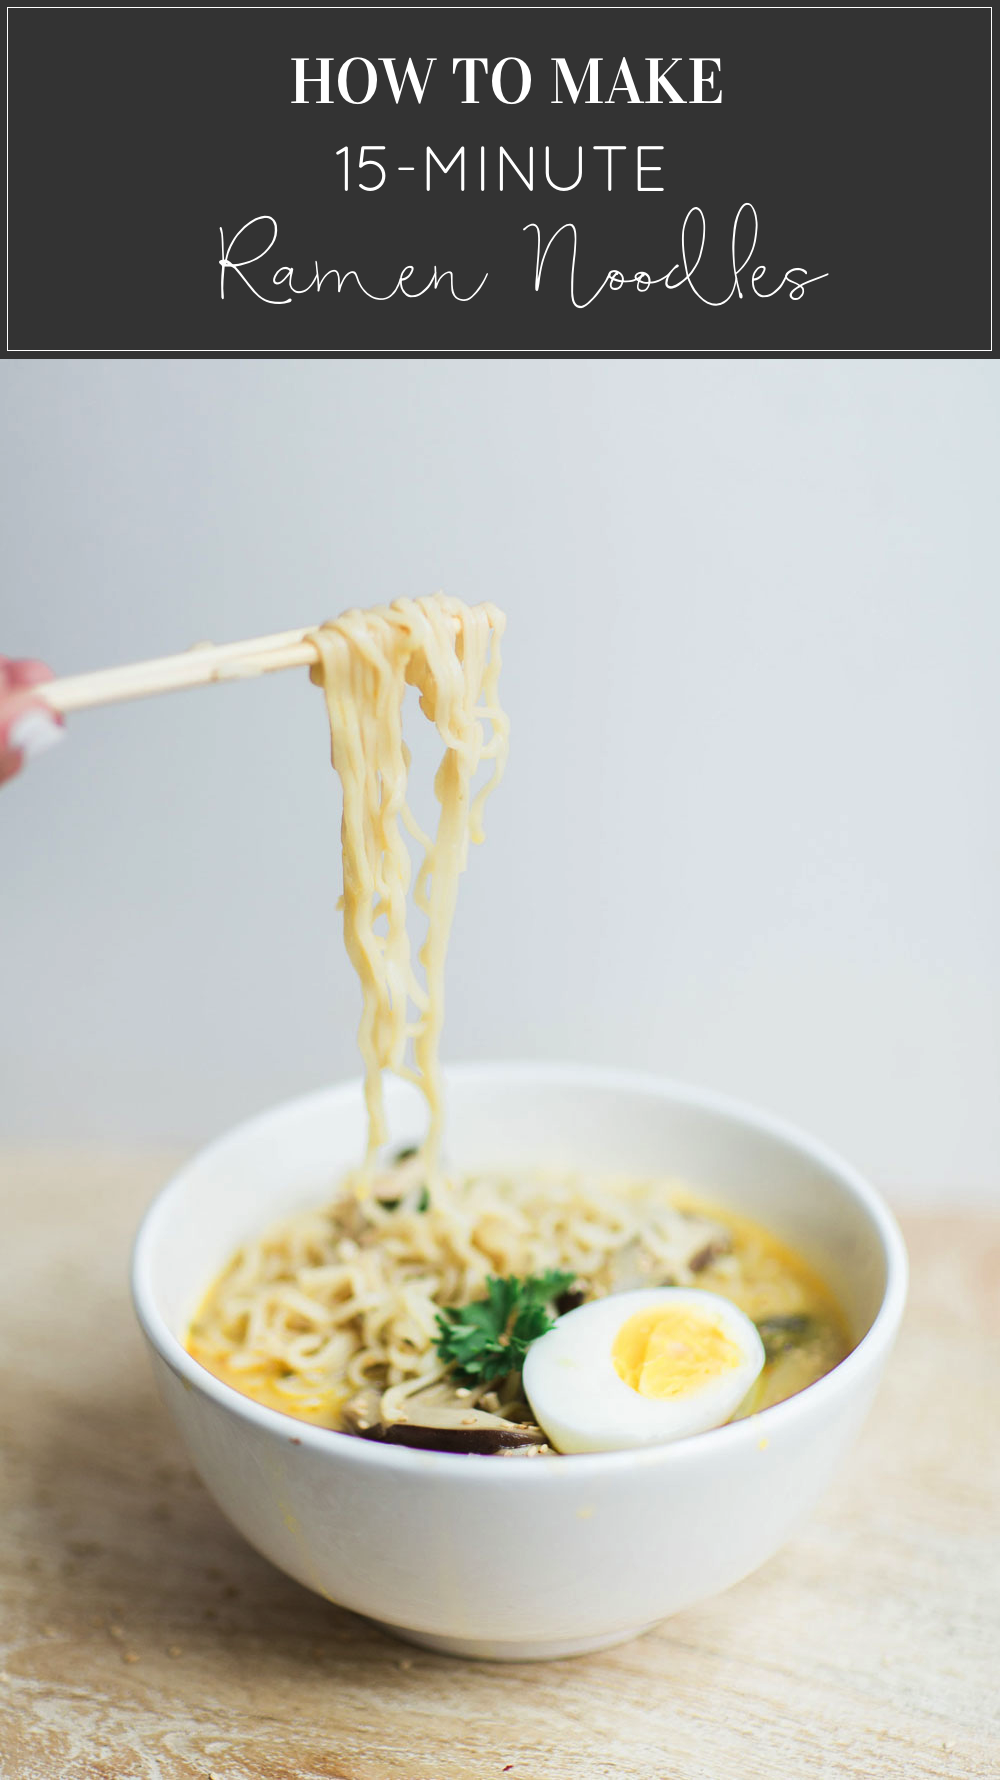 https://glitterinc.com/wp-content/uploads/2017/04/How-to-Make-15-Minute-Ramen-Noodles-at-Home.png